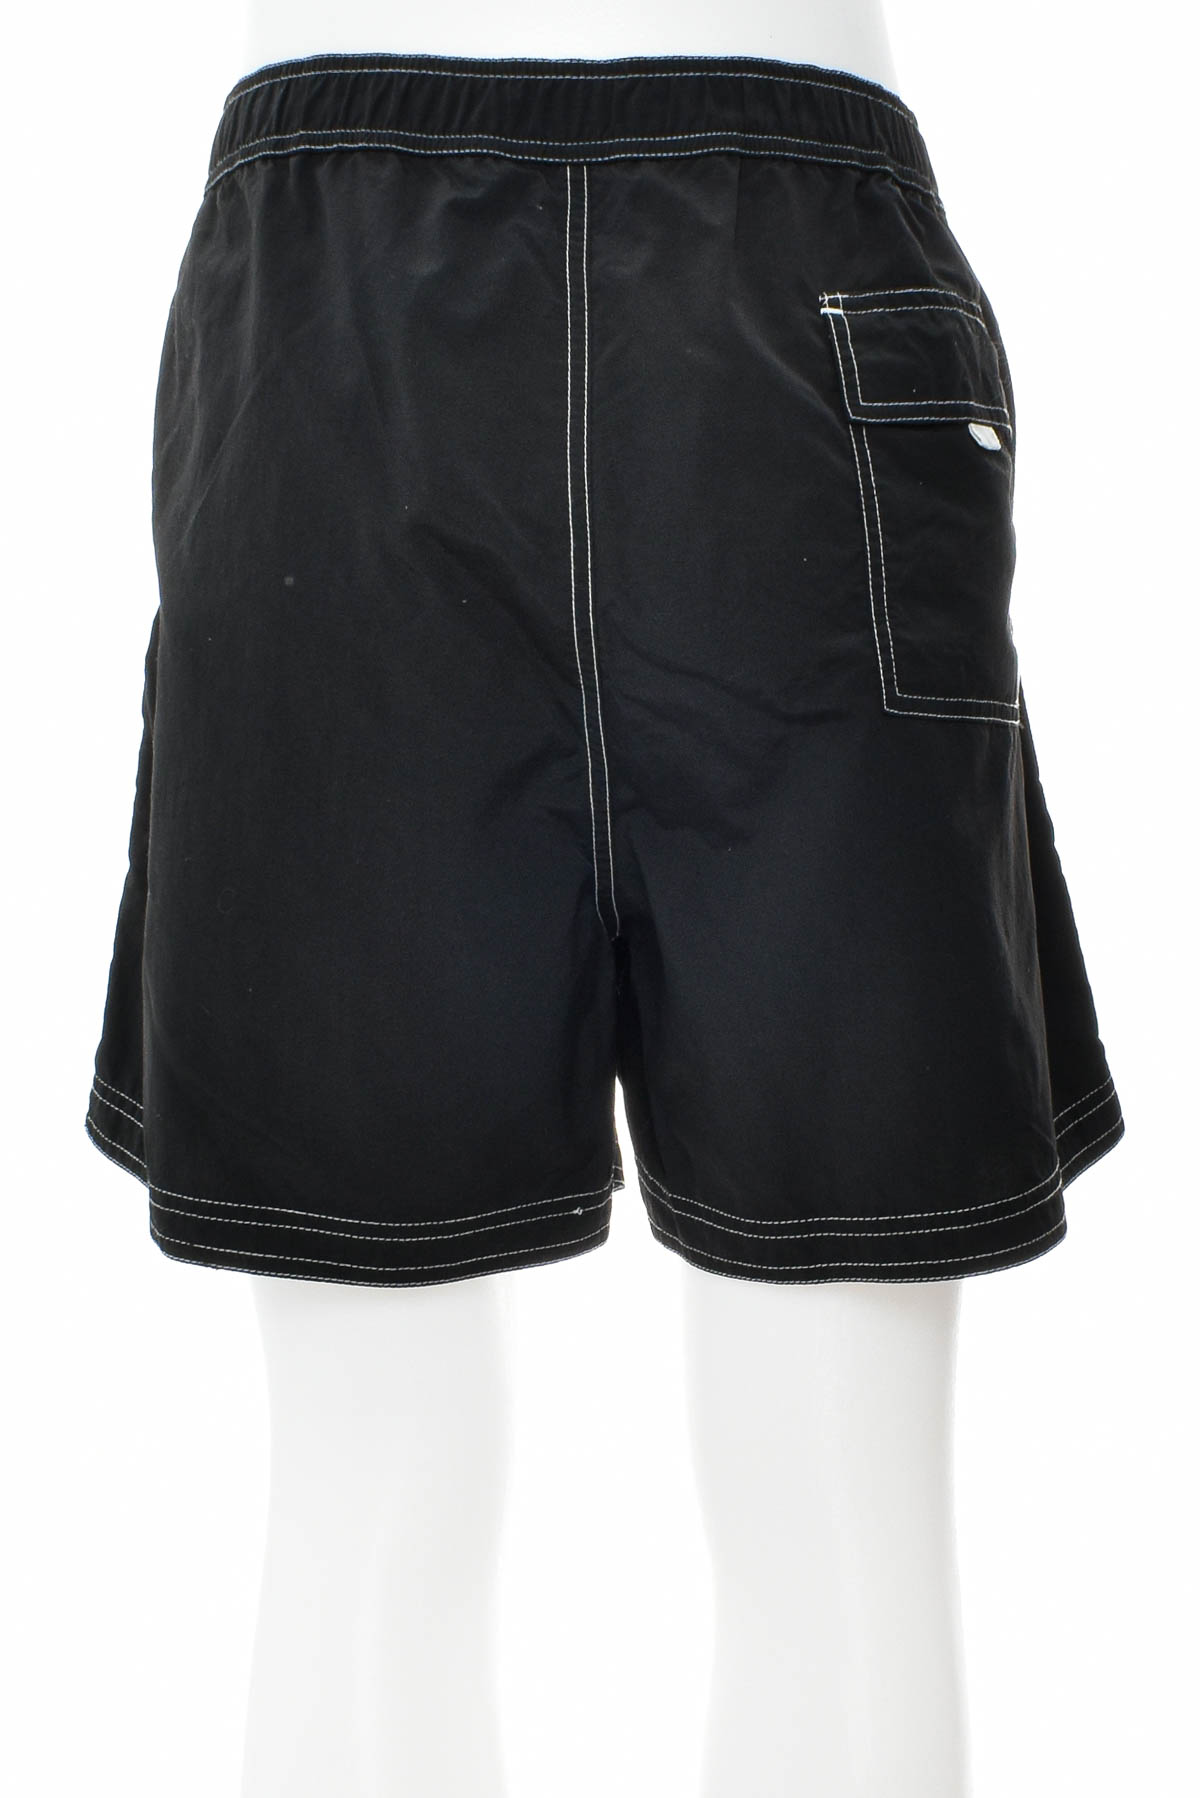 Men's shorts - Proline - 1